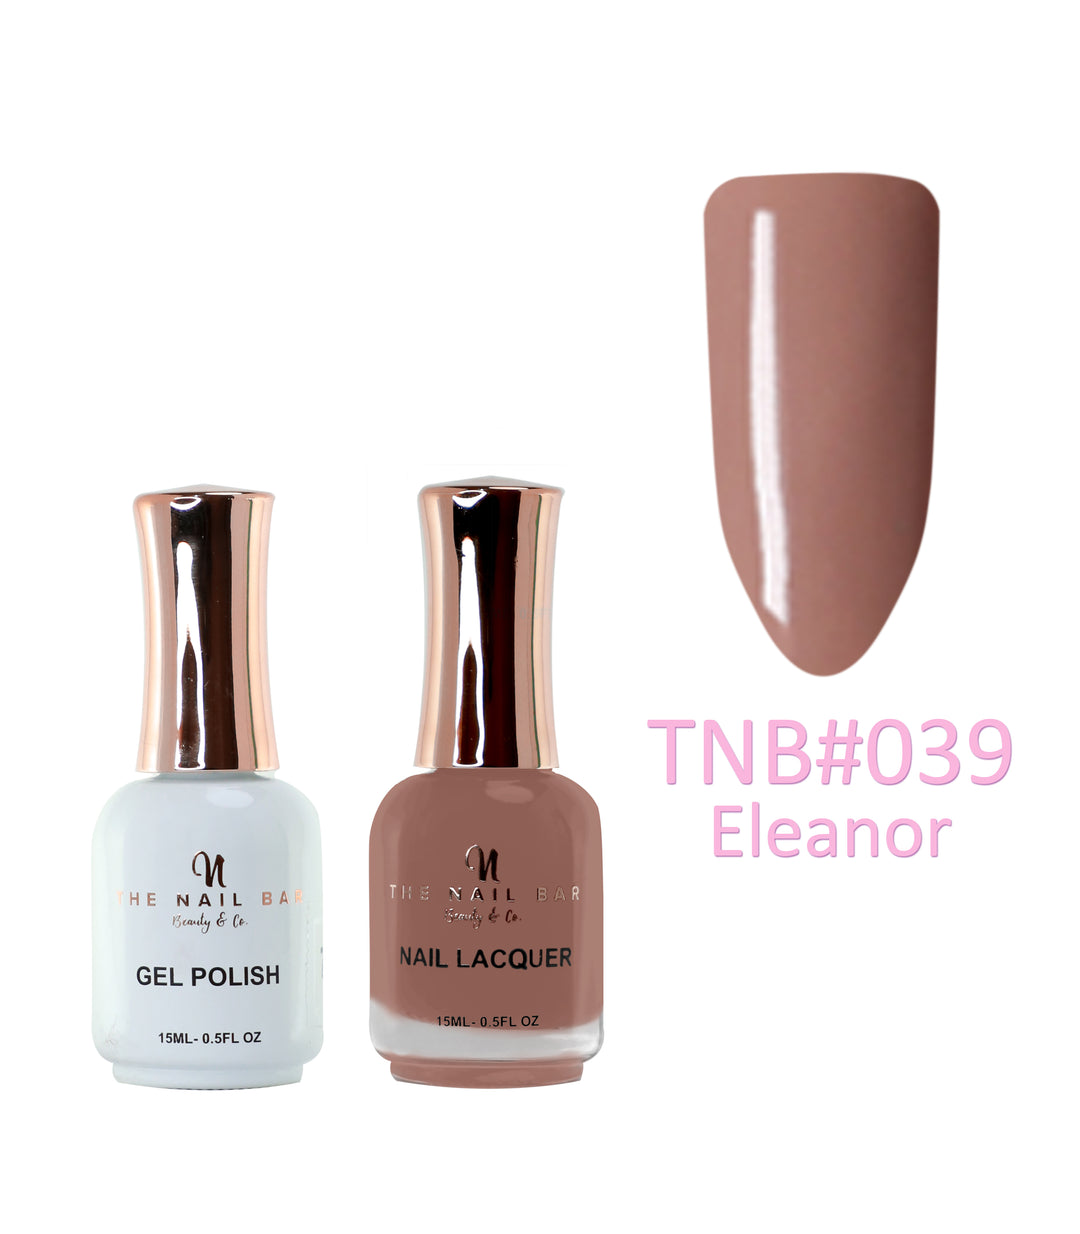 Dual Polish/Gel colour matching (15ml) - Eleanor - The Nail Bar Beauty & Co.